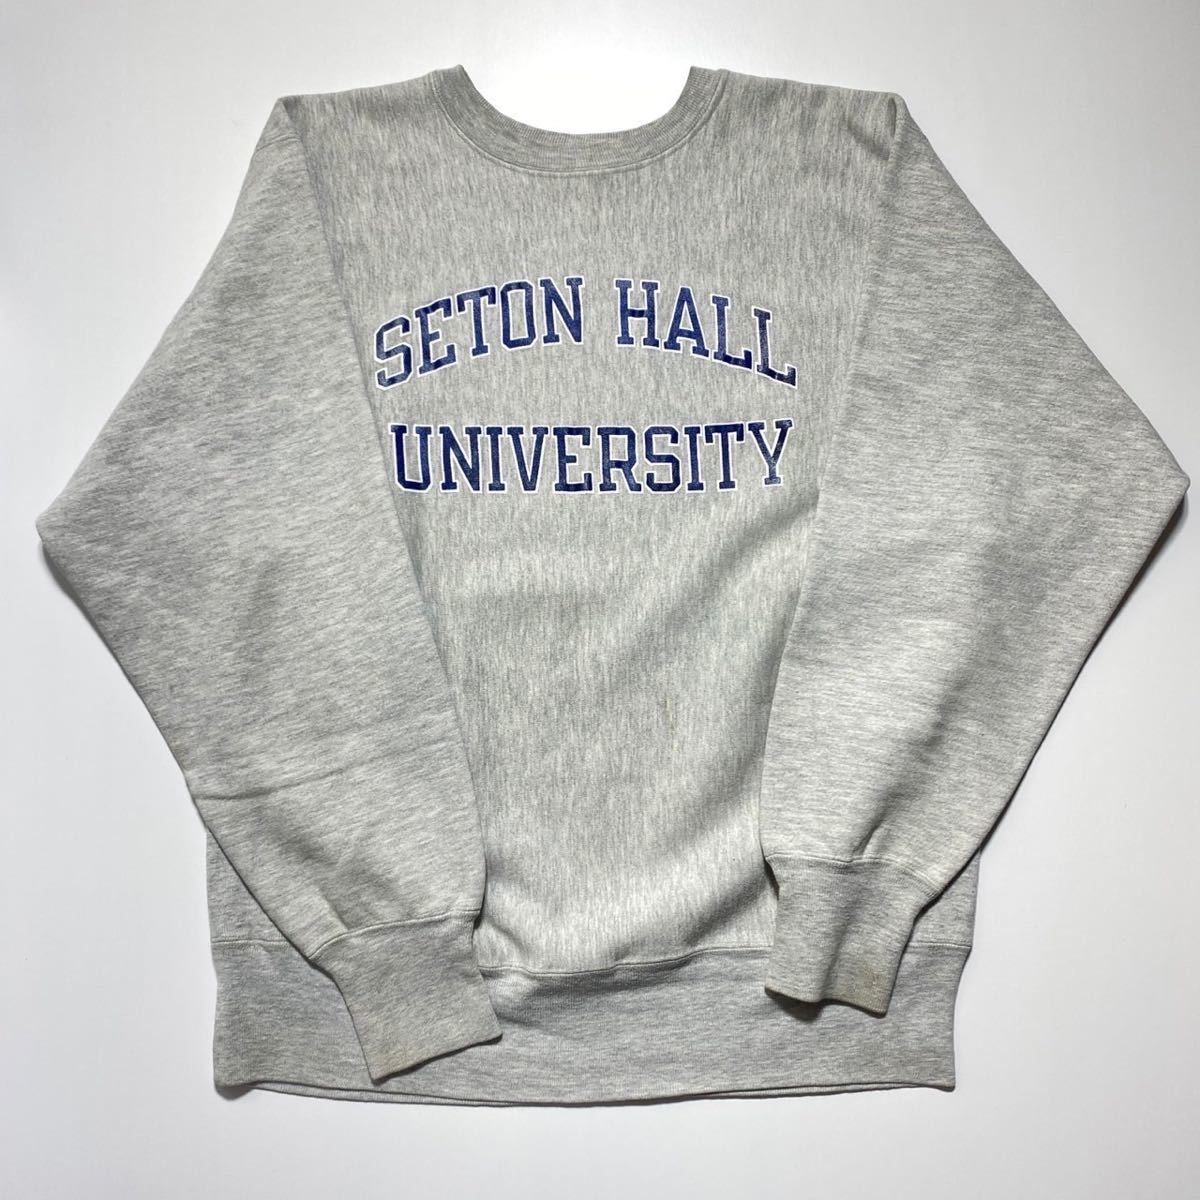 【XL】1980s Champion Reverse Weave Seton Hall University 1980年代 チャンピオン リバースウィーブ プリント トリコタグ USA製 G2181